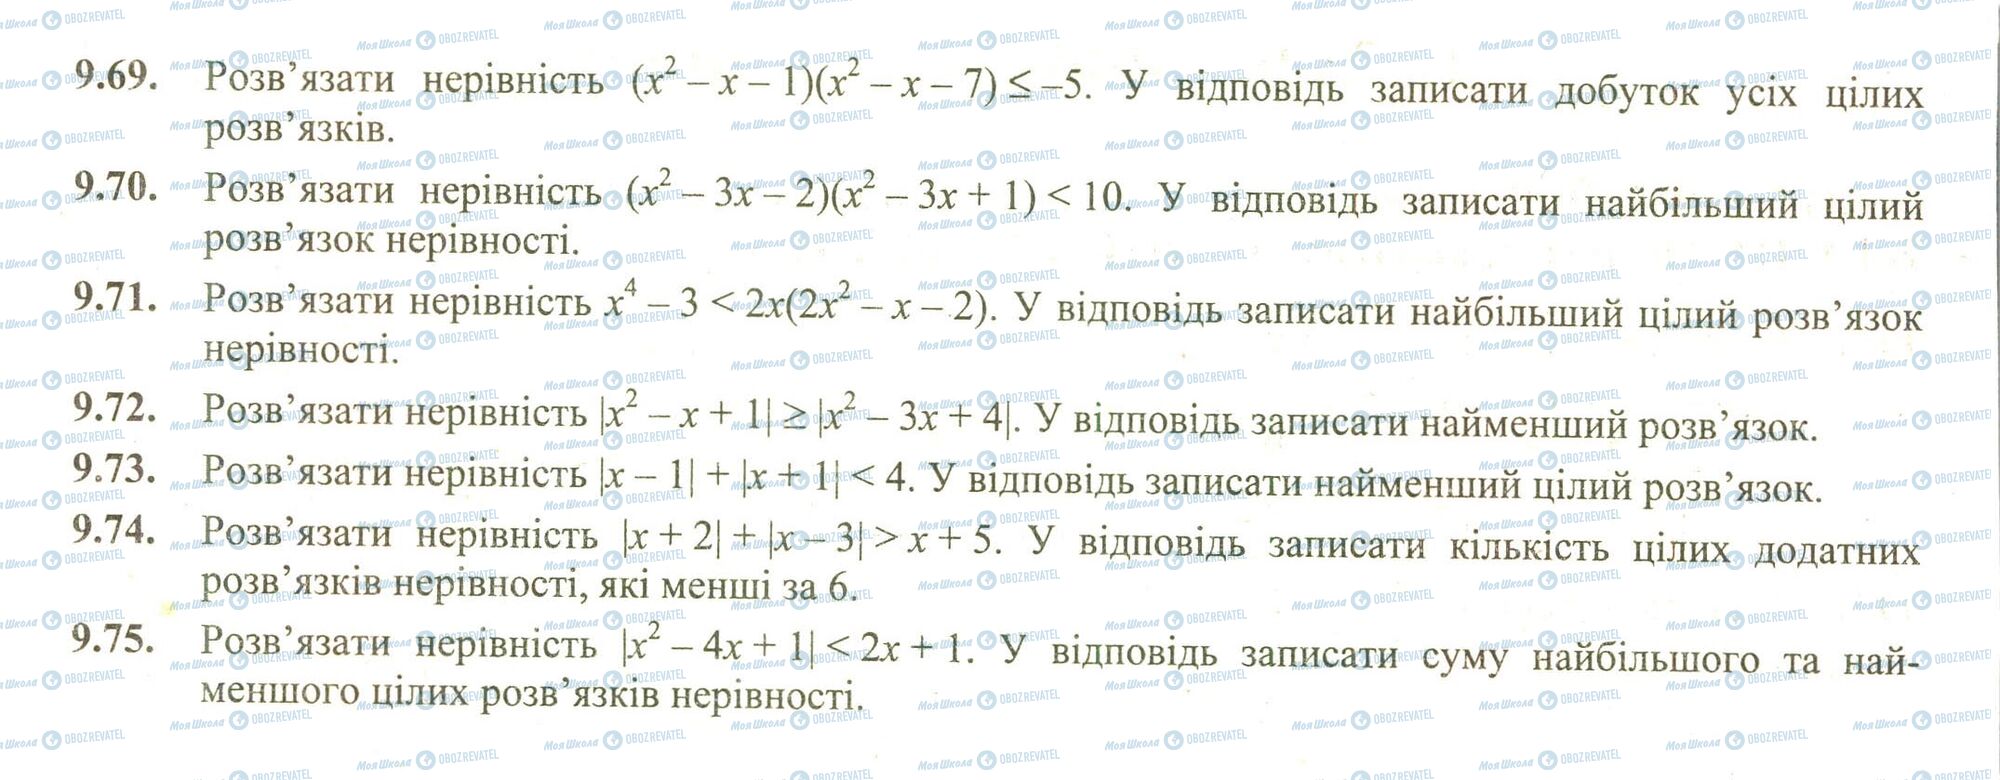 ЗНО Математика 11 класс страница 69-75